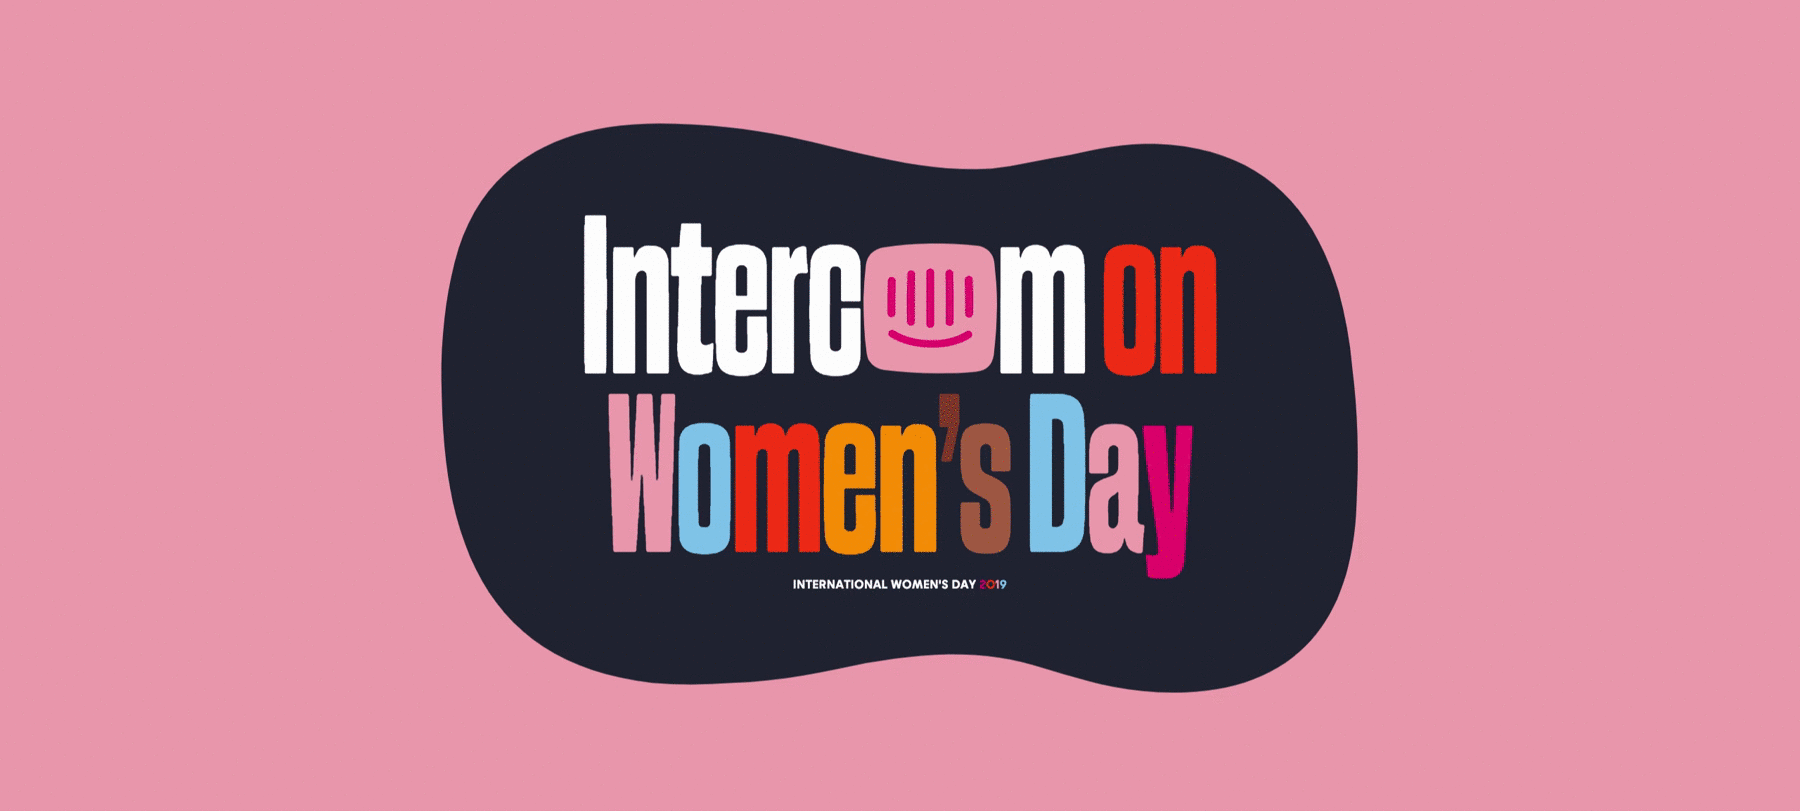 Happy International Women's Day from Intercom - The Intercom Blog